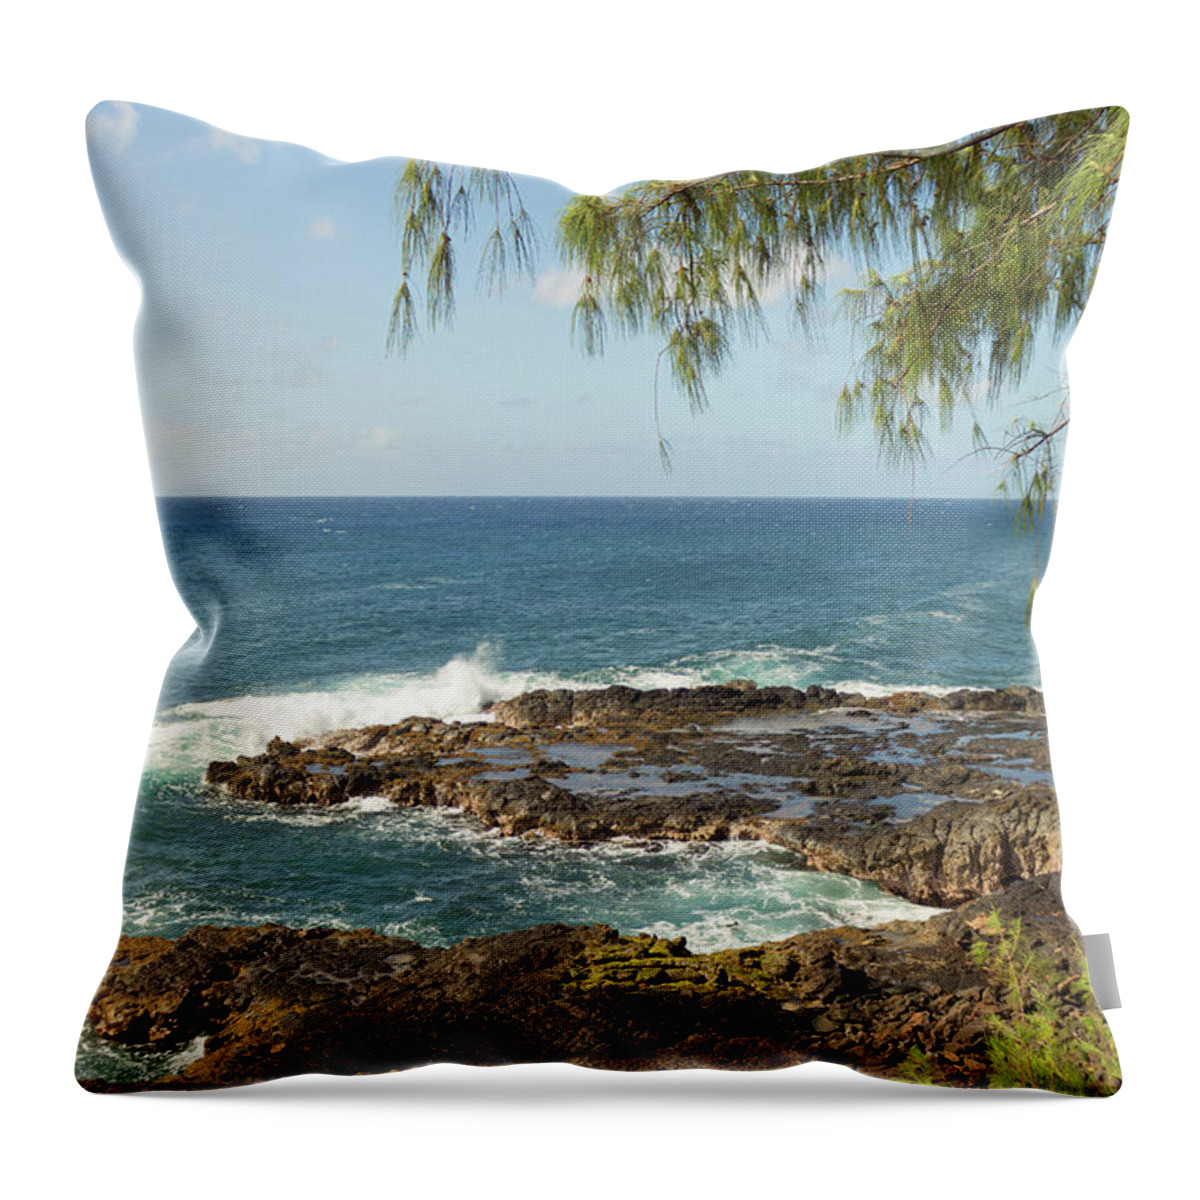 Kauai Throw Pillow featuring the photograph Kauai's South Shore by Auden Johnson